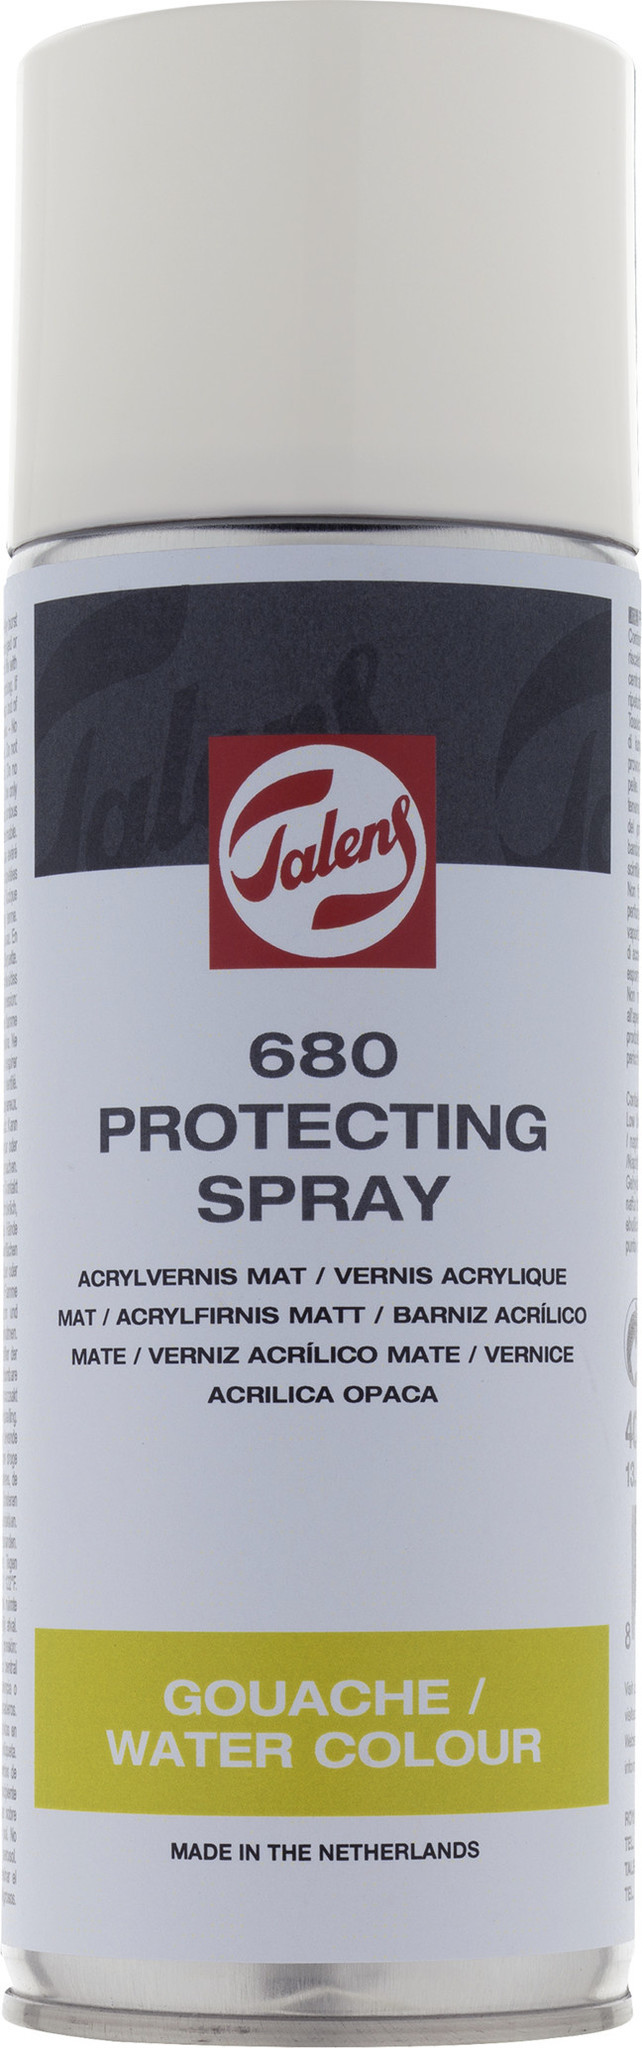 Royal Talens Protecting Spray - 400 ml